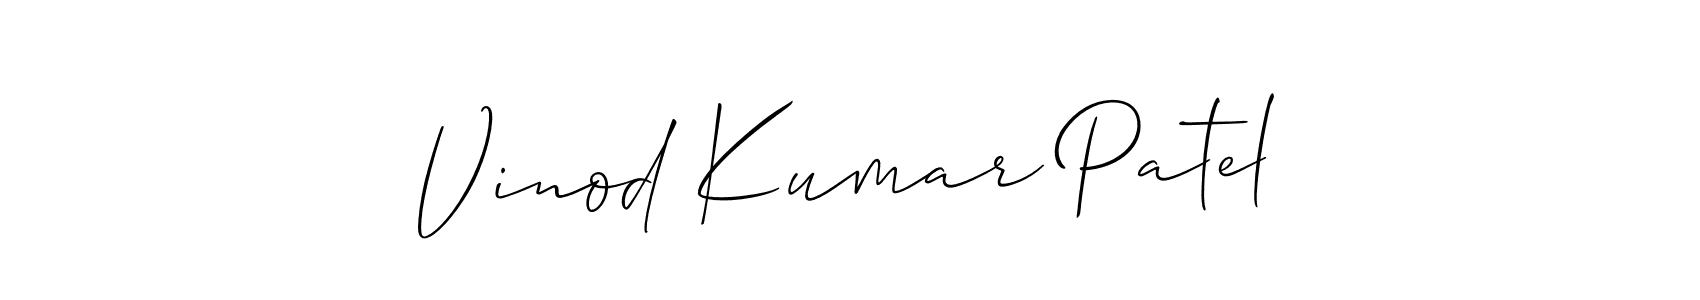 How to make Vinod Kumar Patel signature? Allison_Script is a professional autograph style. Create handwritten signature for Vinod Kumar Patel name. Vinod Kumar Patel signature style 2 images and pictures png